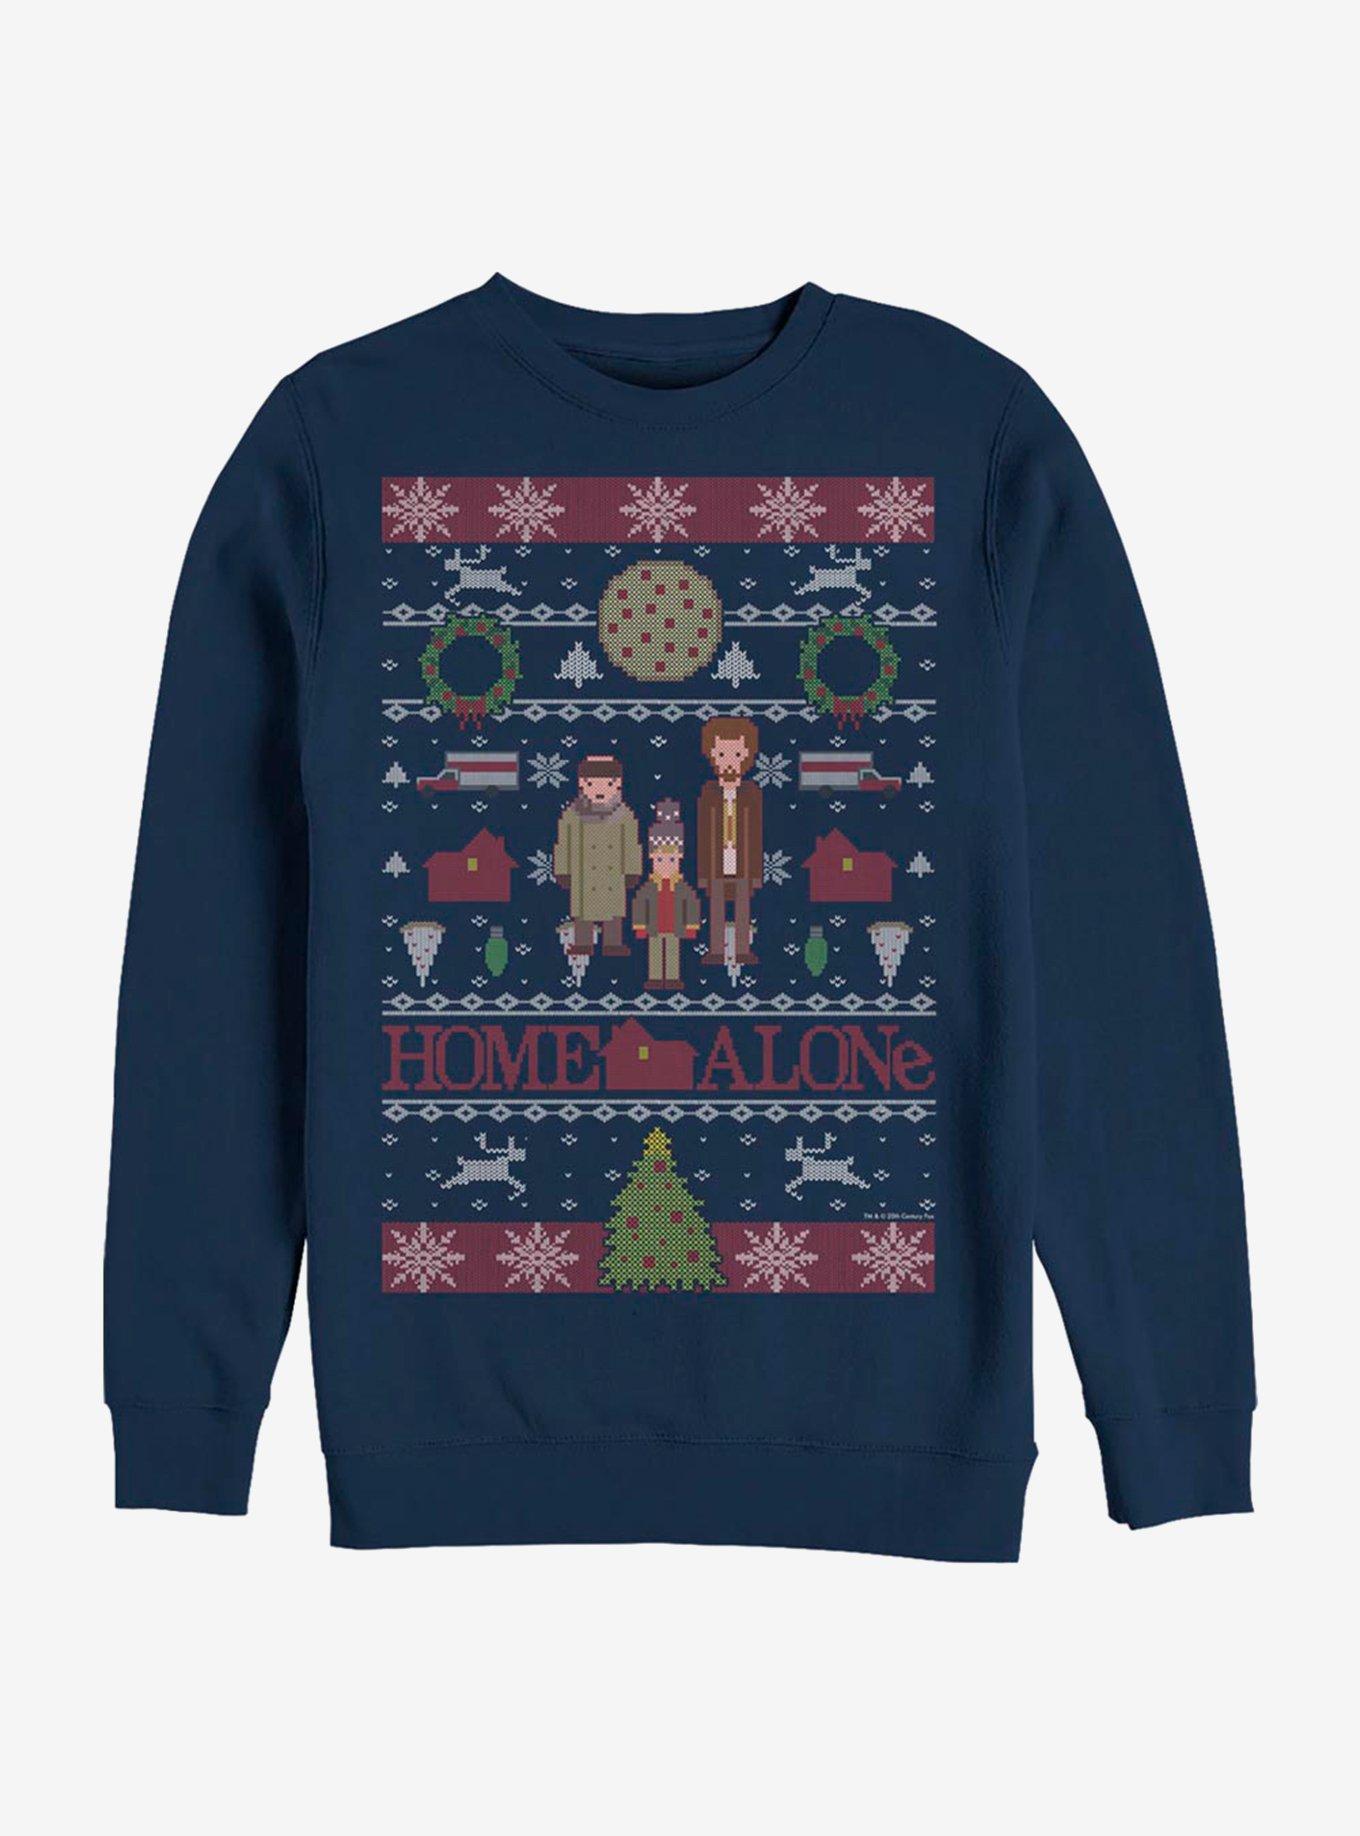 Home Alone Ugly Holiday Crew Sweatshirt, NAVY, hi-res